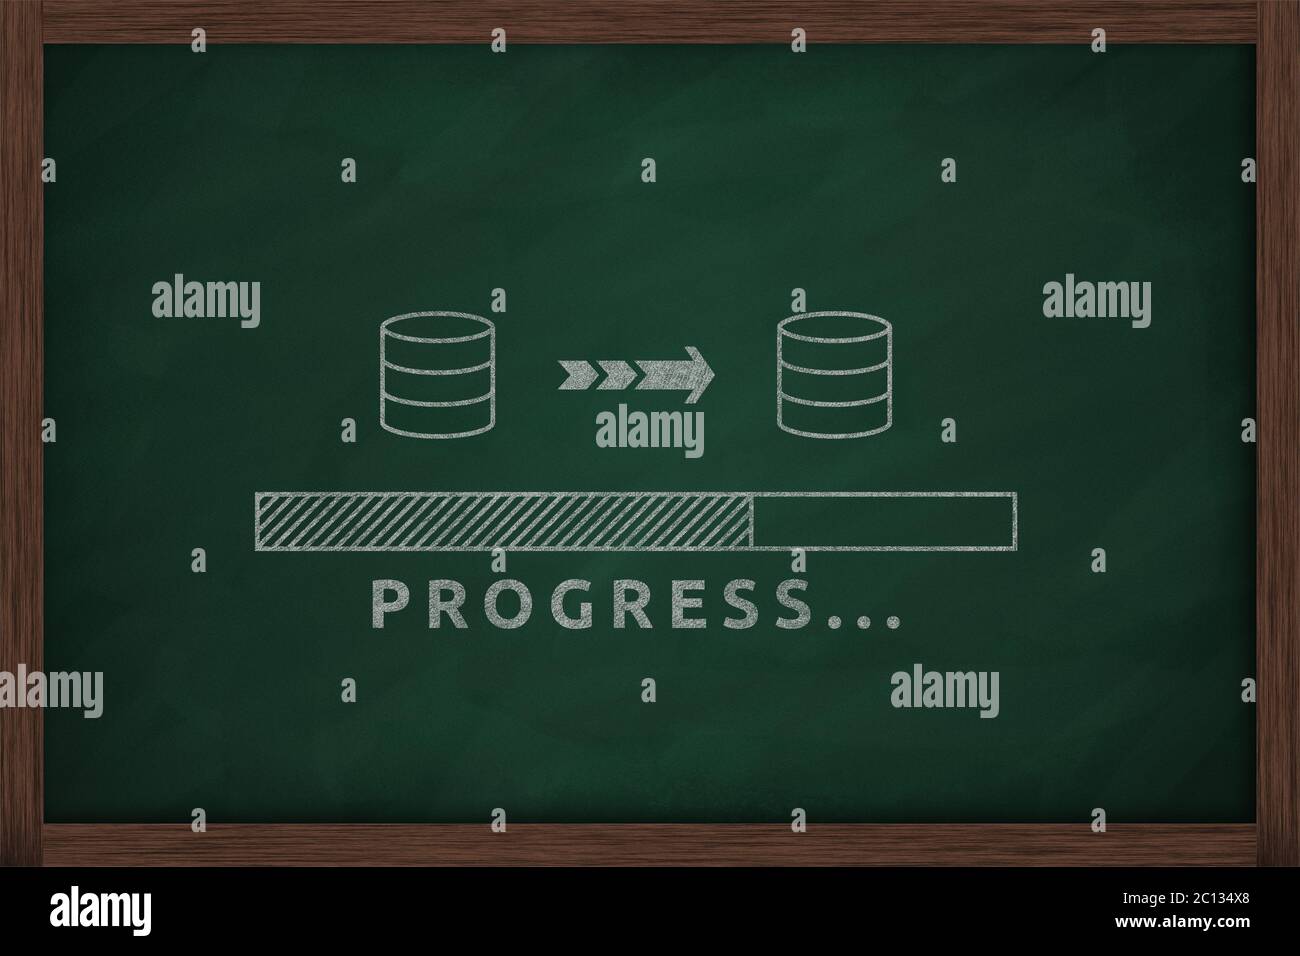 Progress writed on a blackboard and drawing progress bar Stock Photo